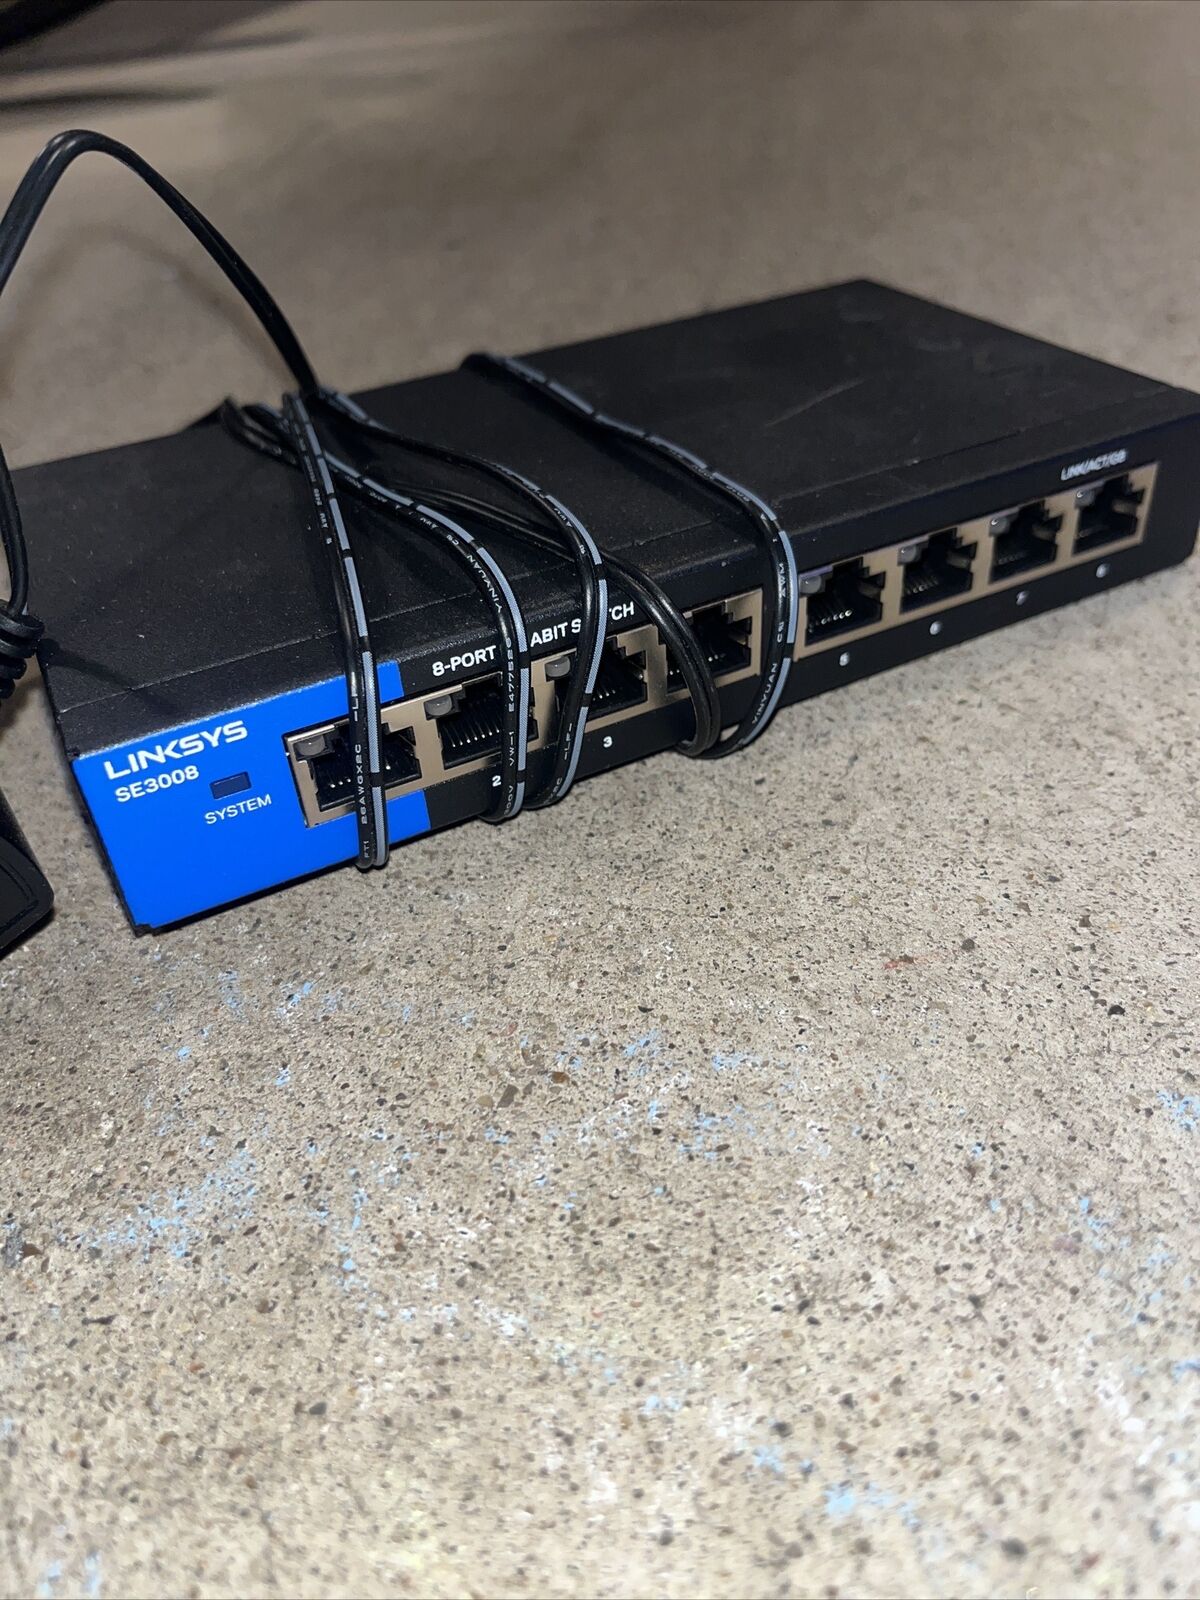 Linksys SE3008 8-Port Gigabit Ethernet Switch